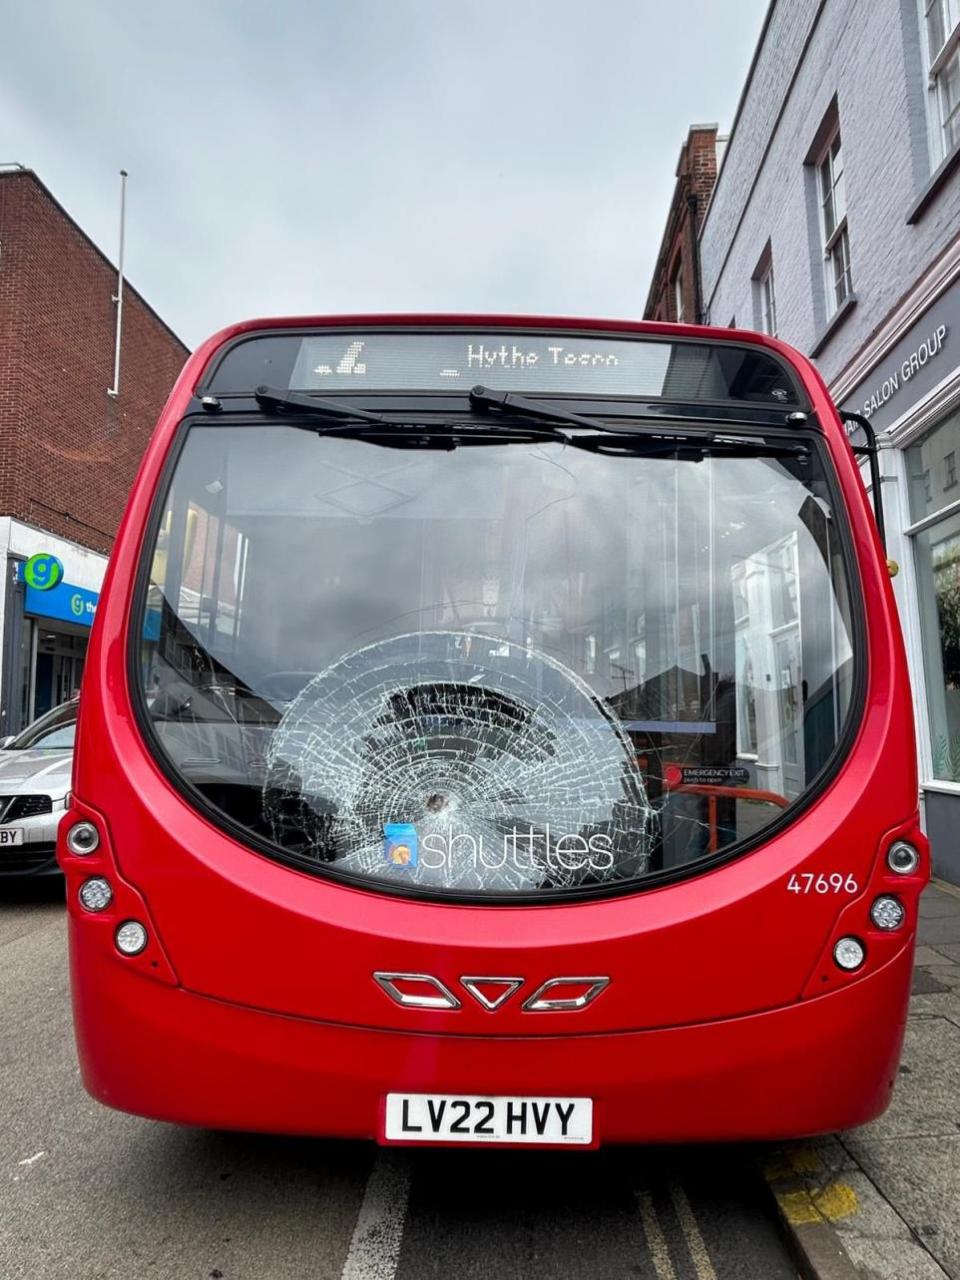 Gazette: Vandalised - the bus